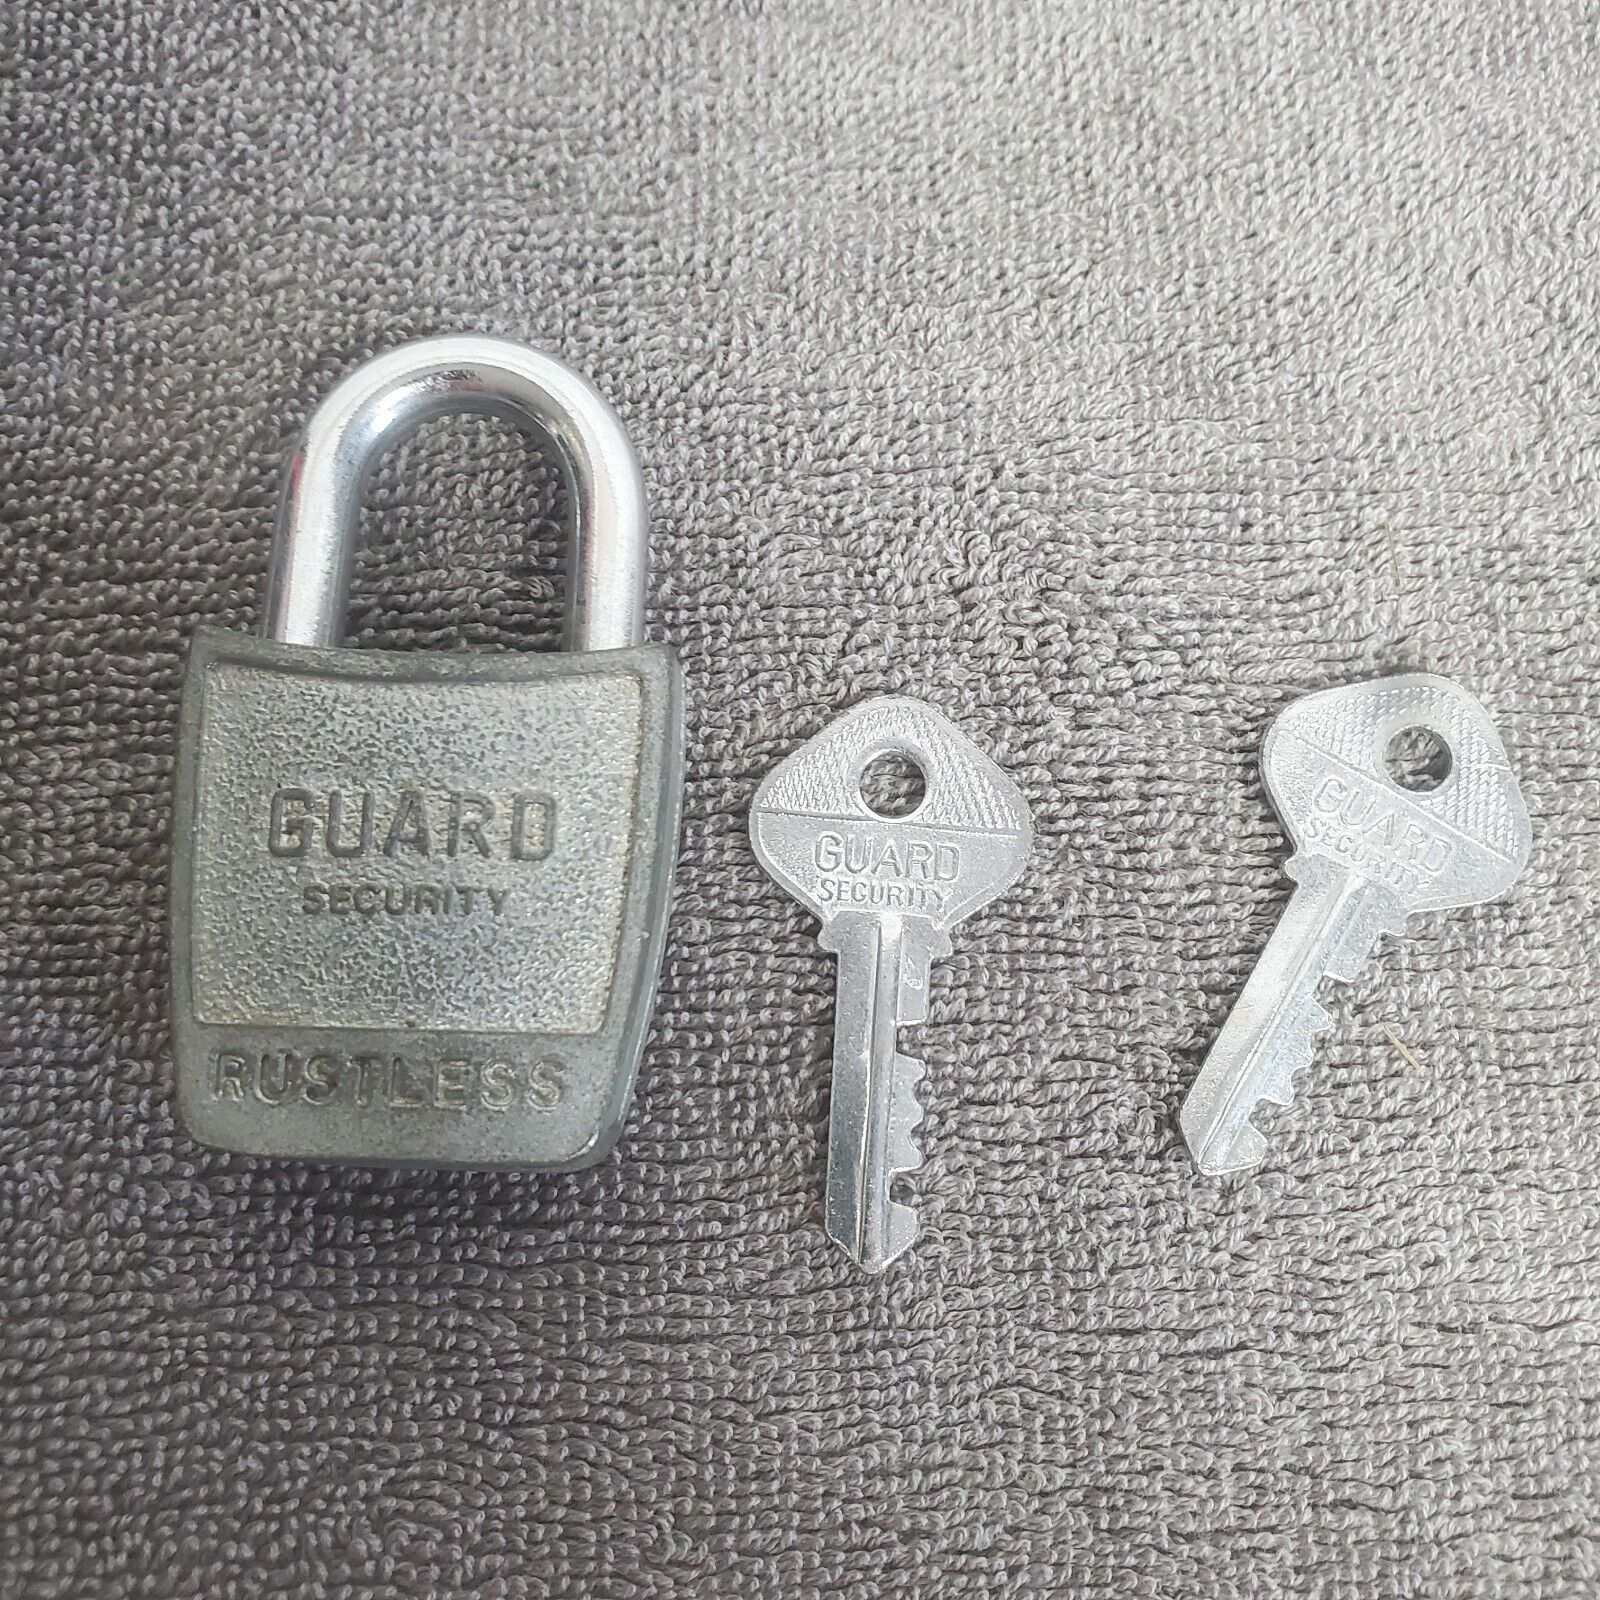 Vintage Guard Security Padlock 2 Keys